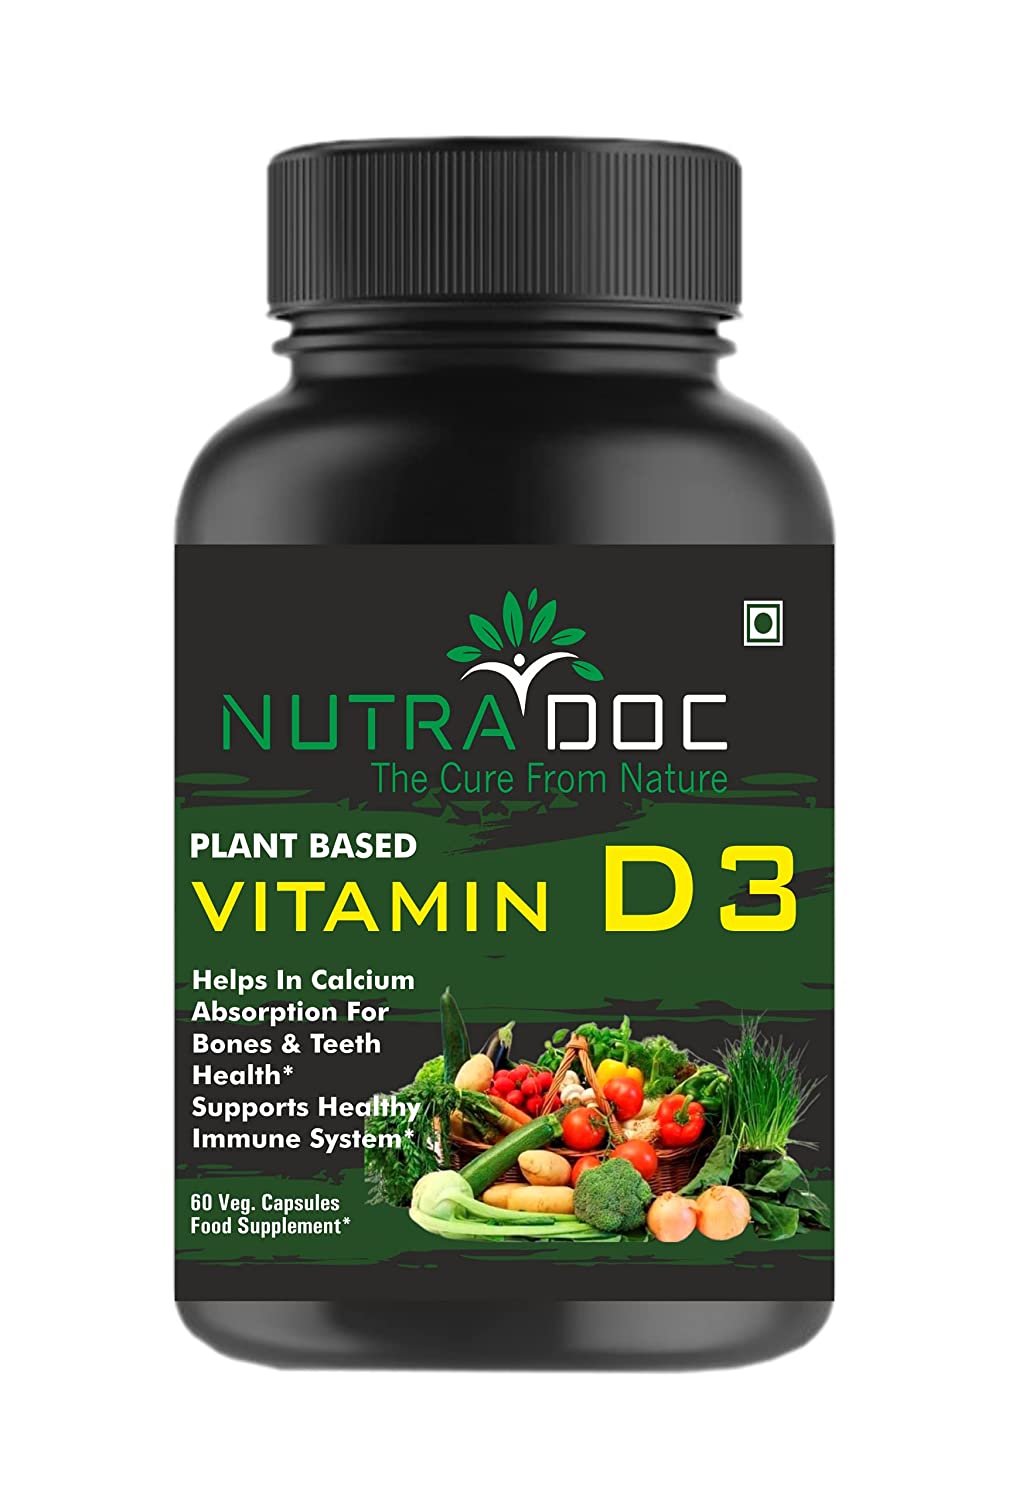 Nutradoc Plant Based Vitamin D3 Image